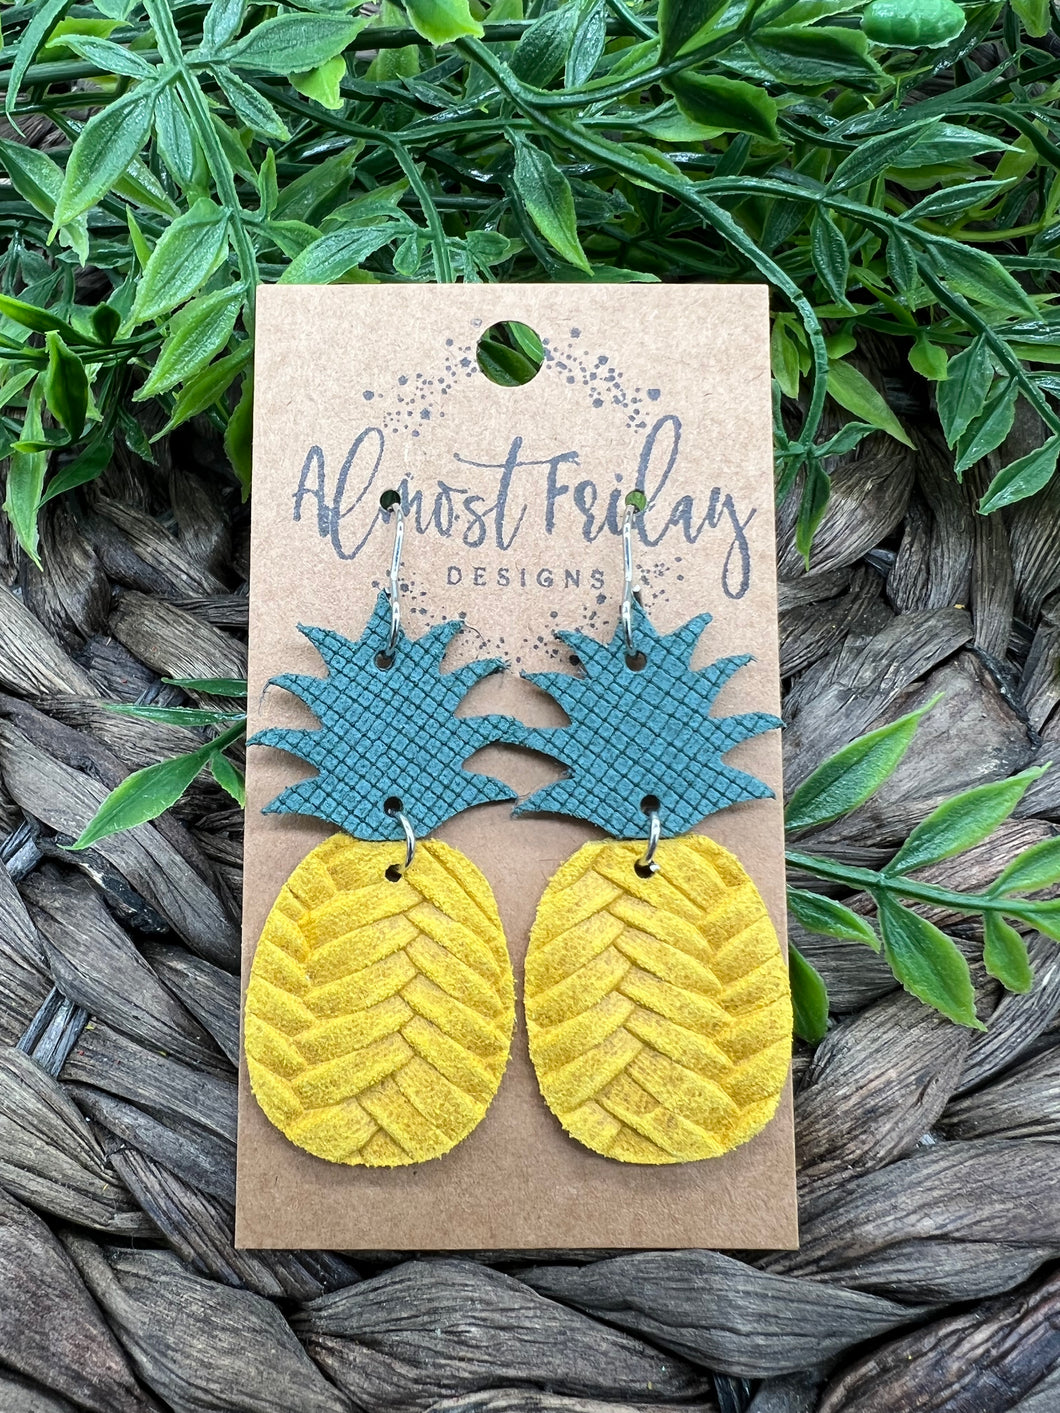 Genuine Leather Earrings - Pineapple Earrings - Yellow - Green - Textured Leather - Colorful - Summer Earrings - Statement Earrings